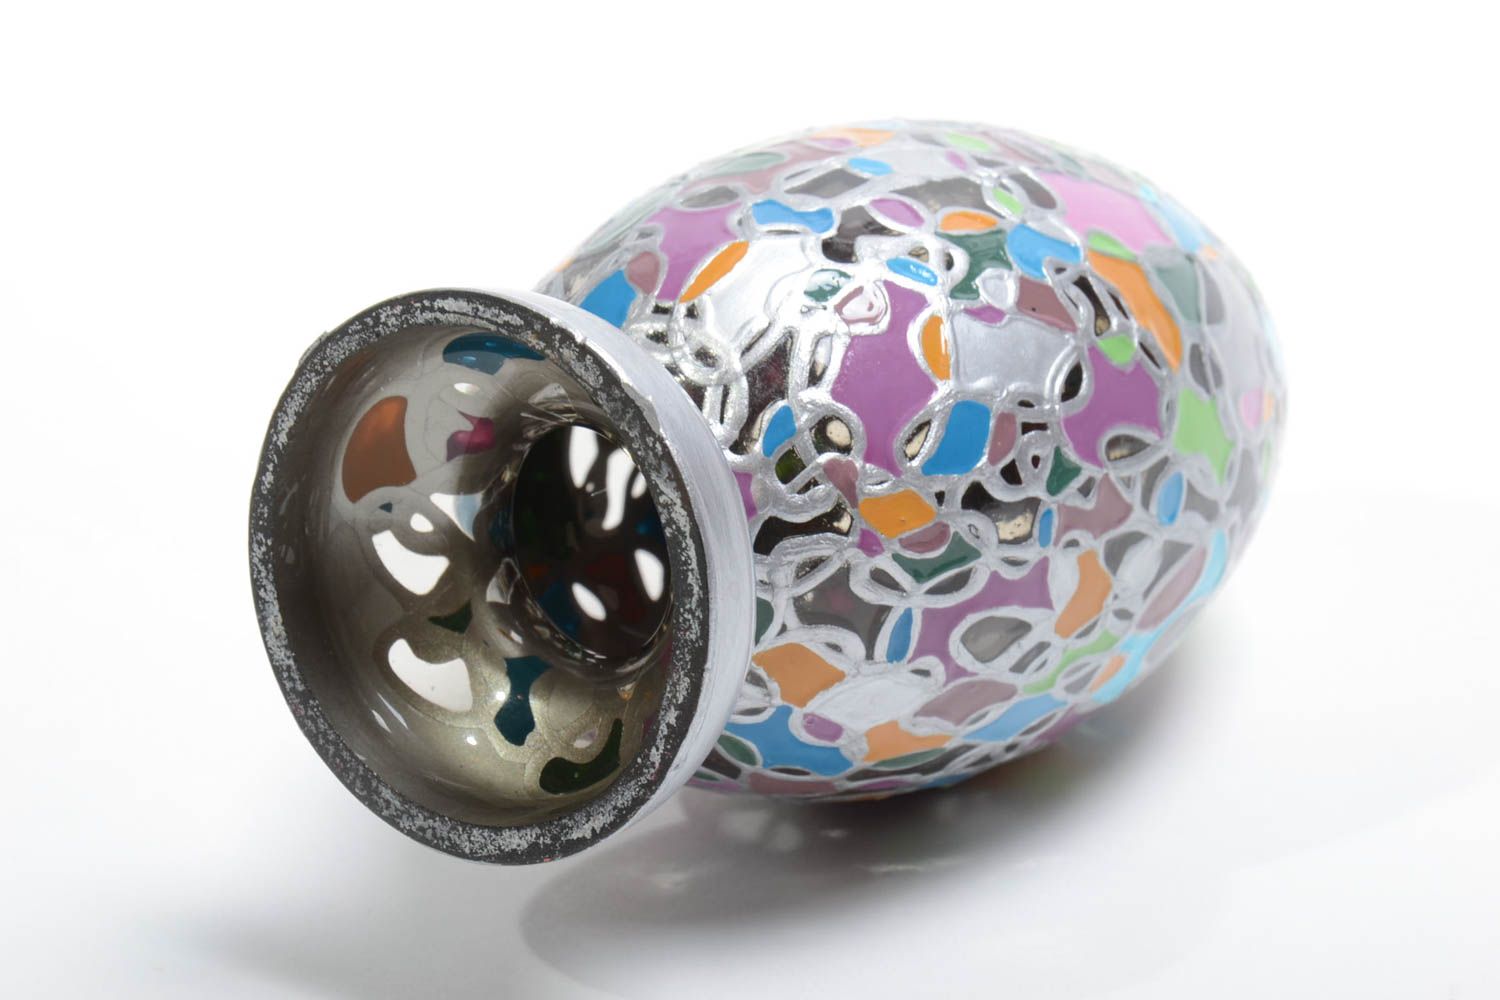 Handmade glass figurine decorative eggs easter egg designs stained glass decor photo 4